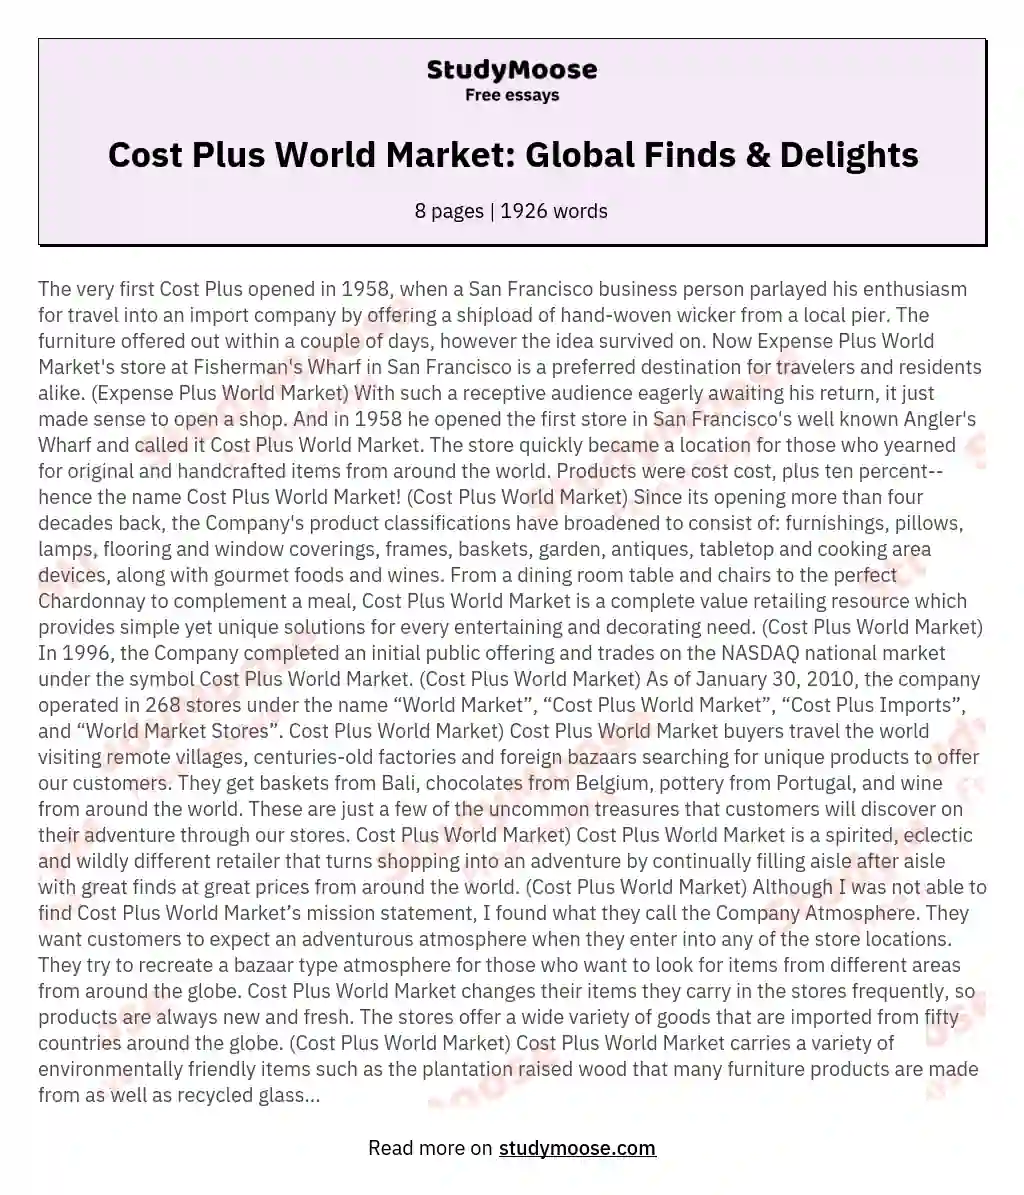 Cost Plus World Market: Global Finds & Delights essay